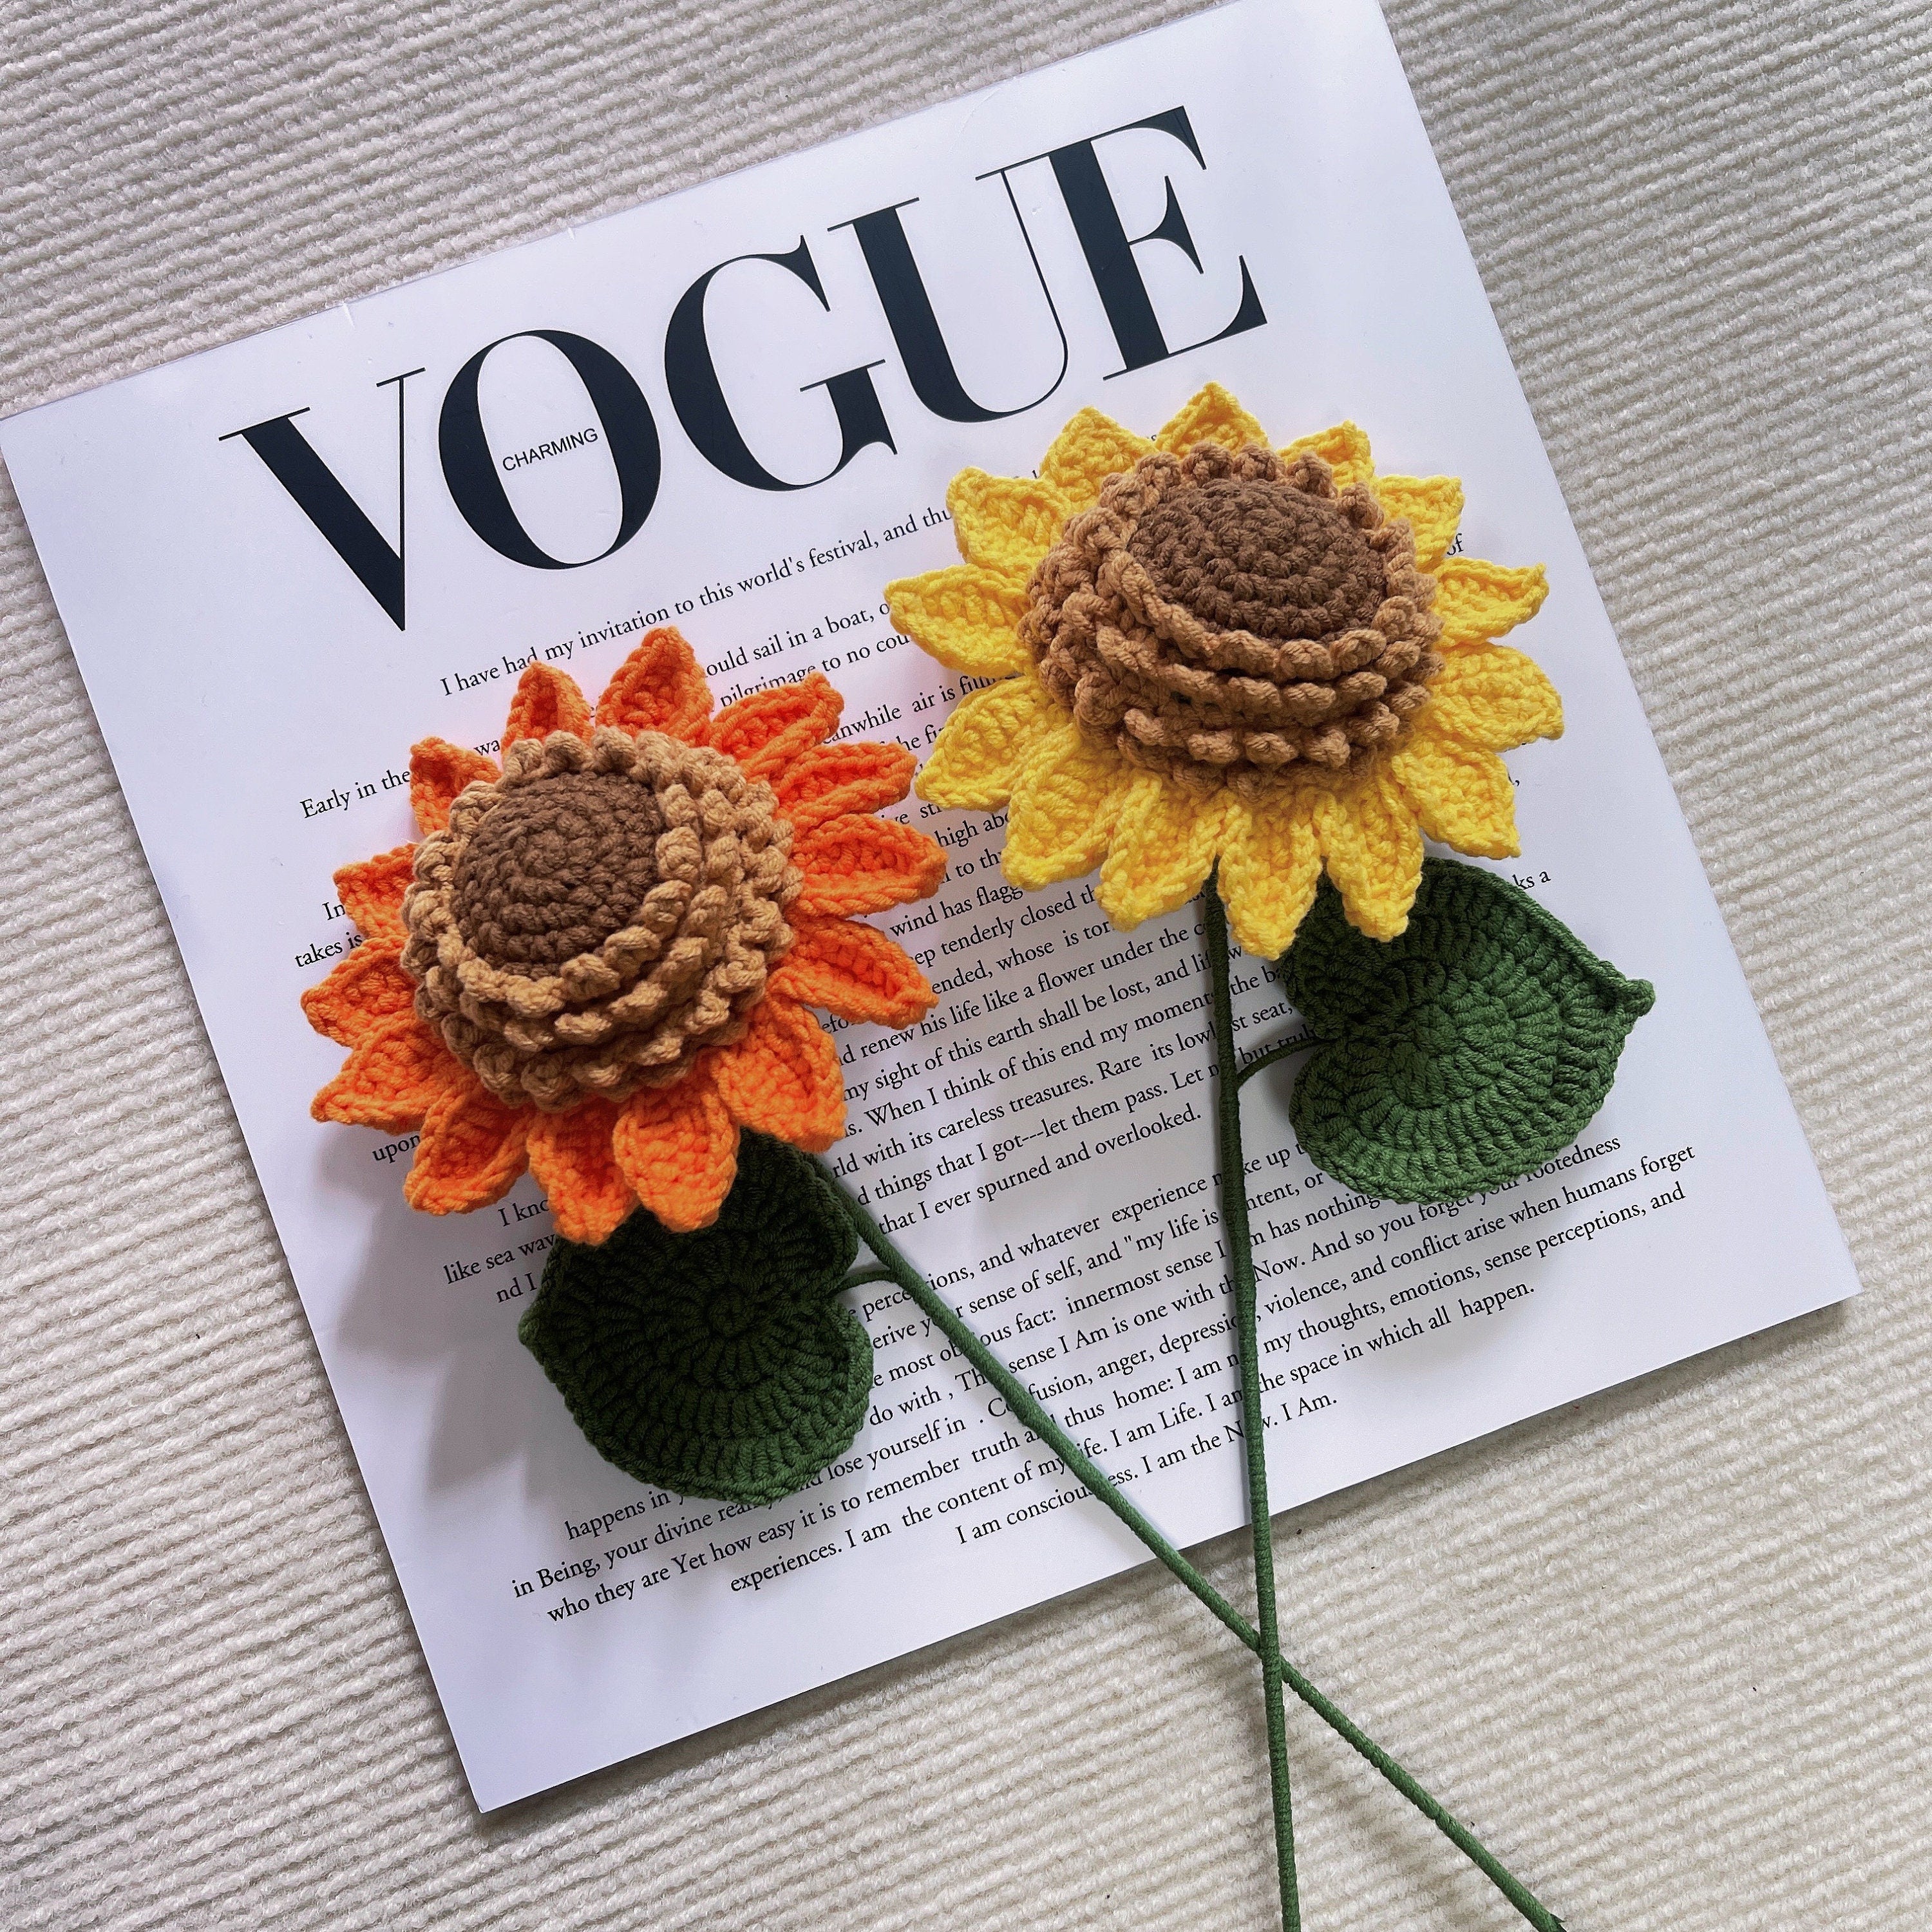 Crochet Sunflower,Single Sunflower Ornament,Sunflower Gifts,Floral Home Decor,Housewarming Decor,Gifts for Her